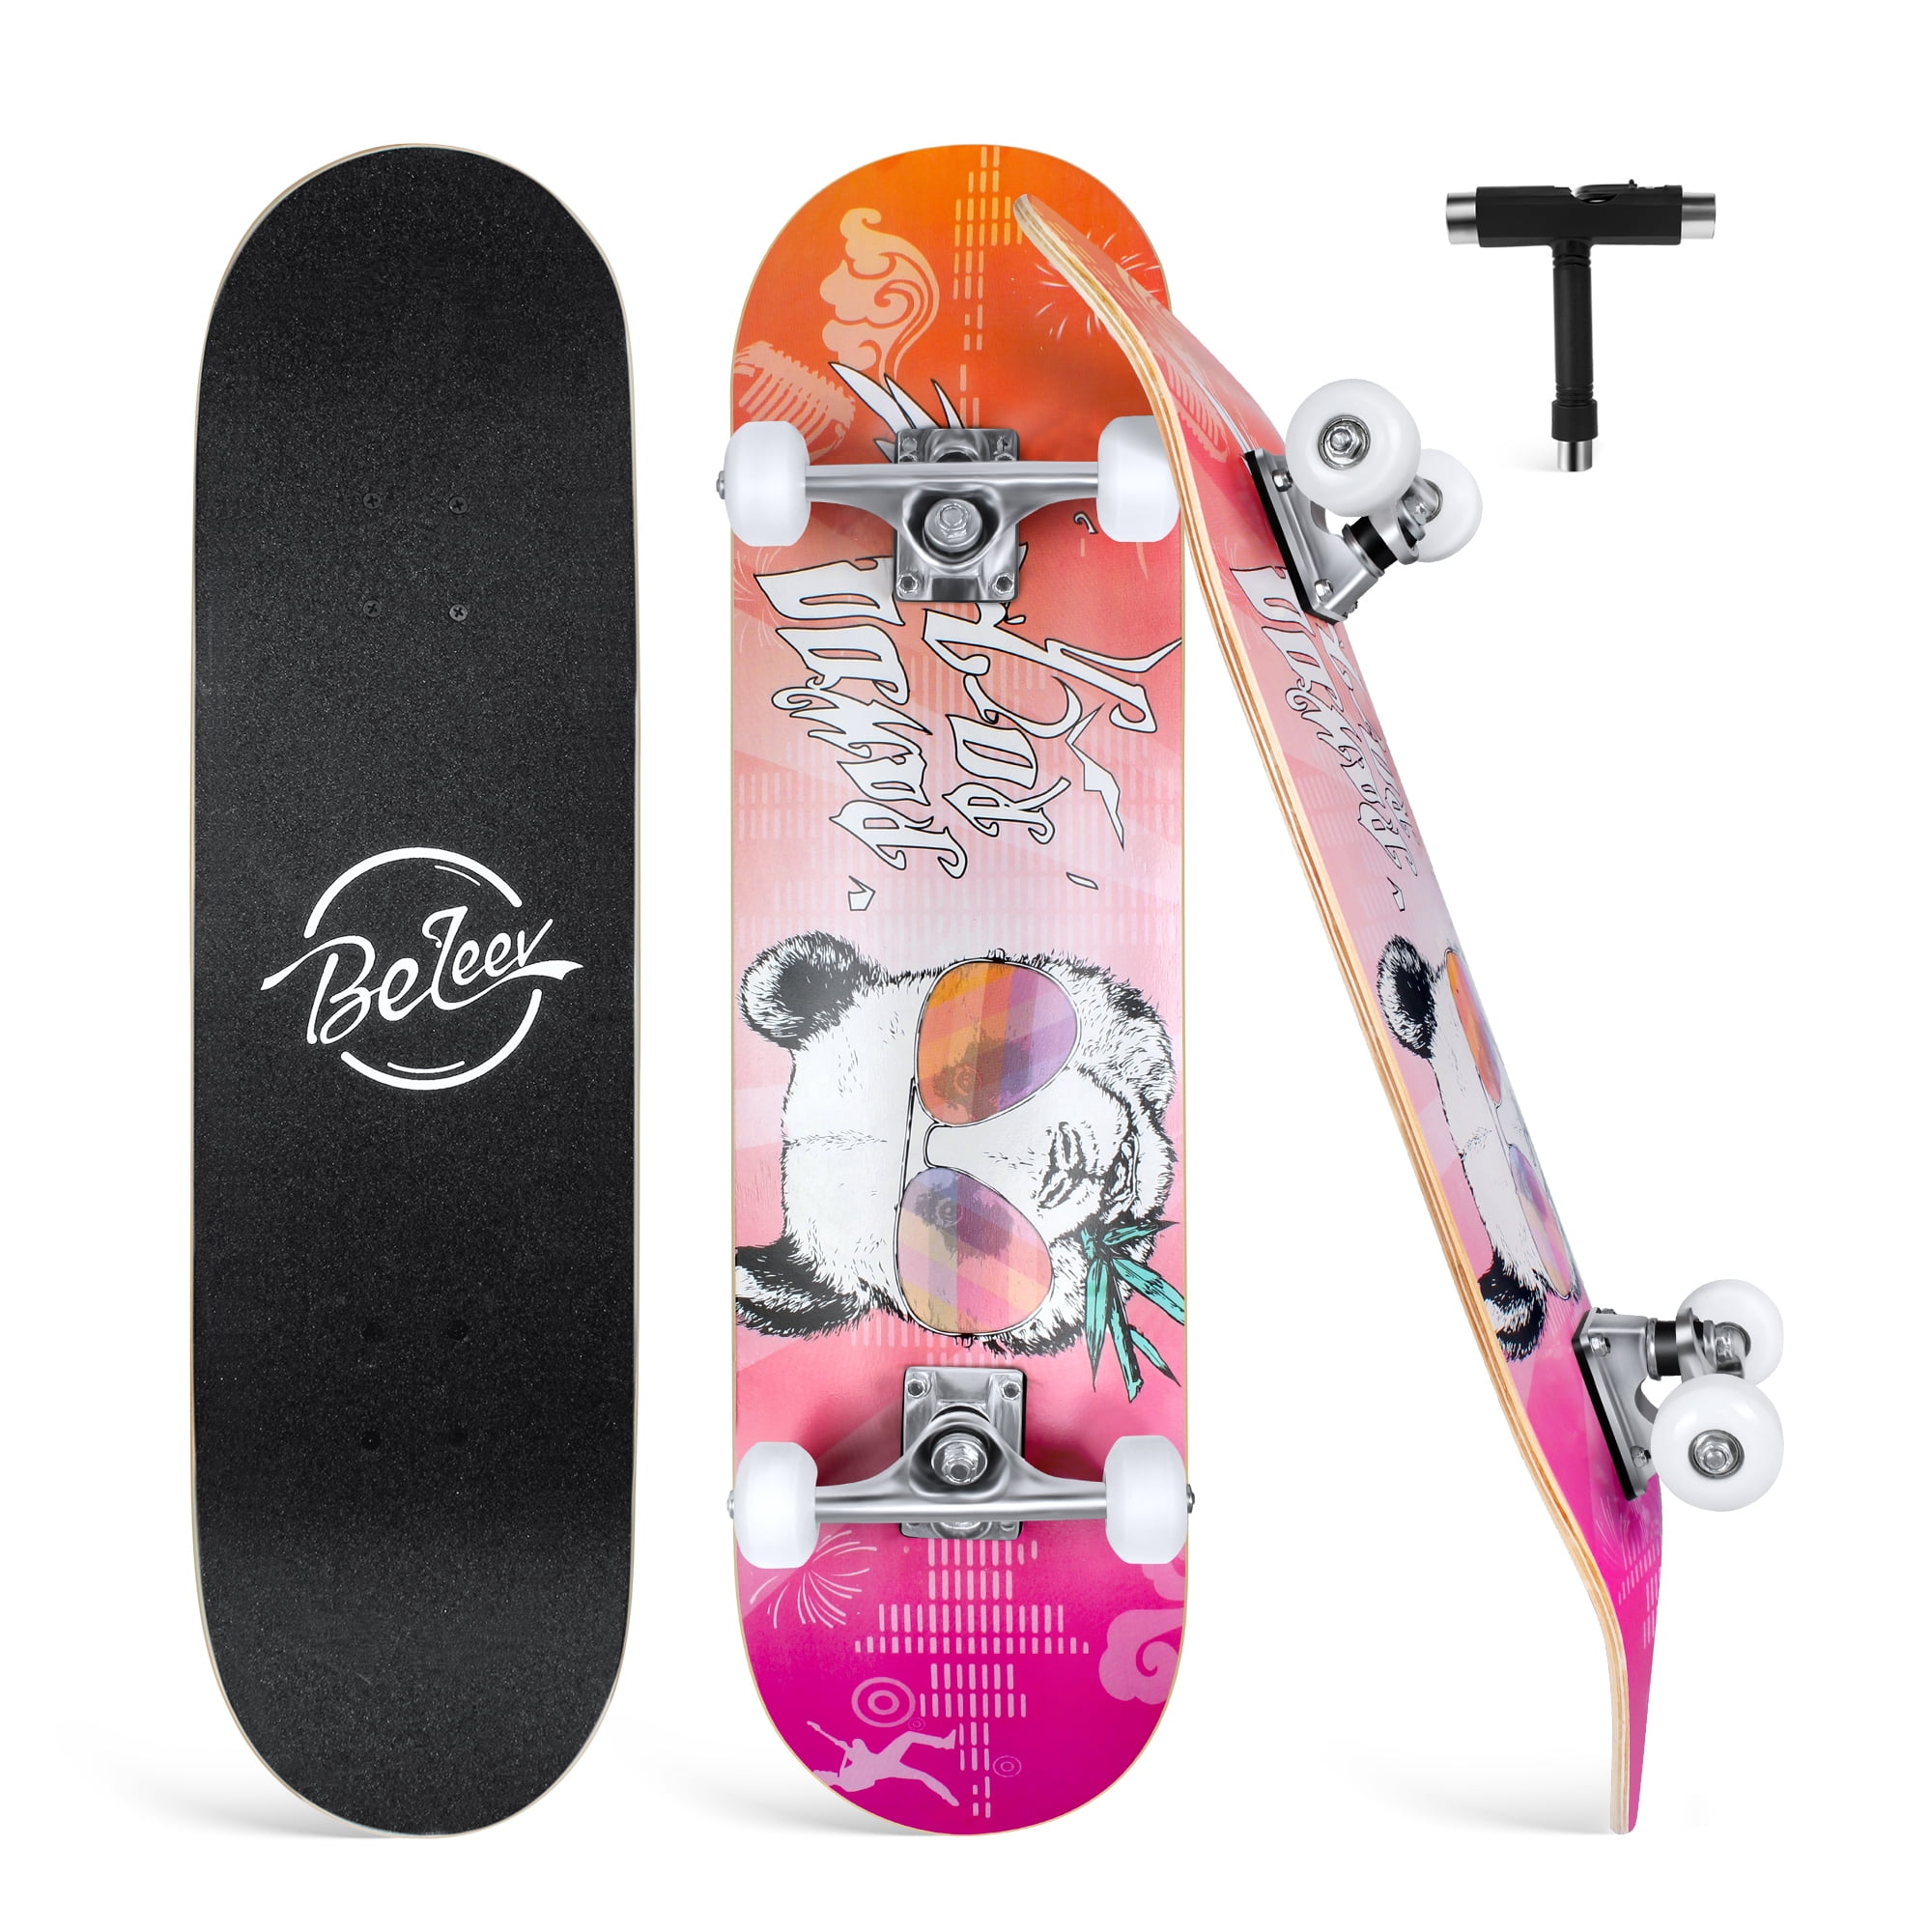 Beleev Skateboards for Beginners 31 Inch Complete Skateboard for Kids Teens s, 